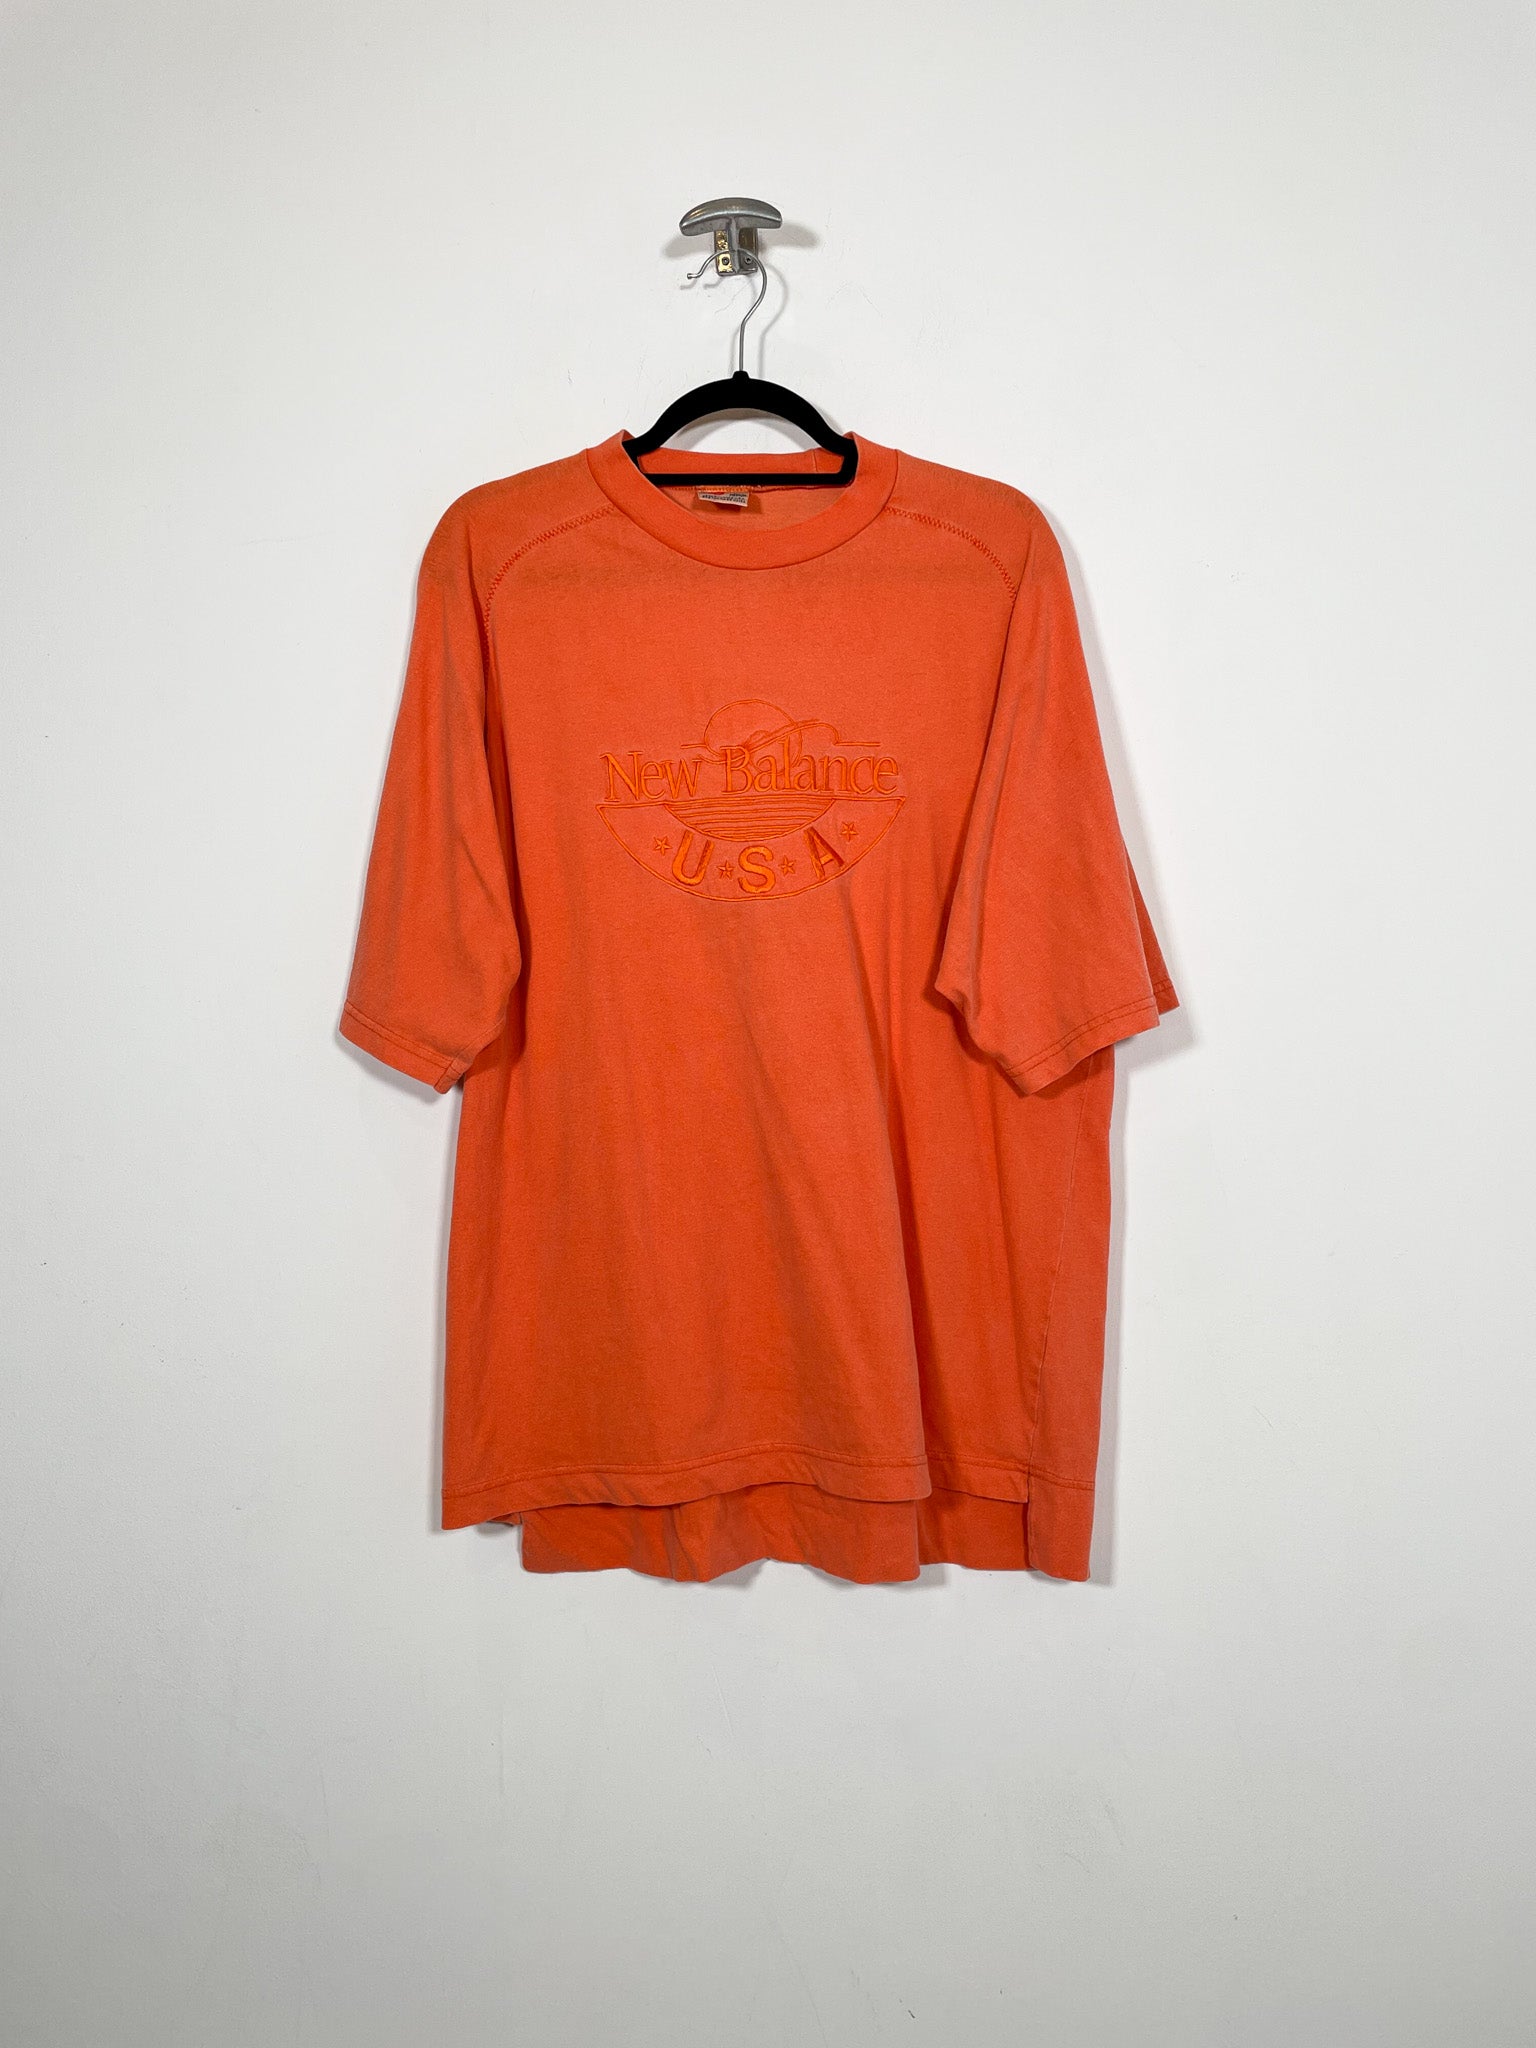 Camiseta New Balance - Talla L - Caramelo Vintage